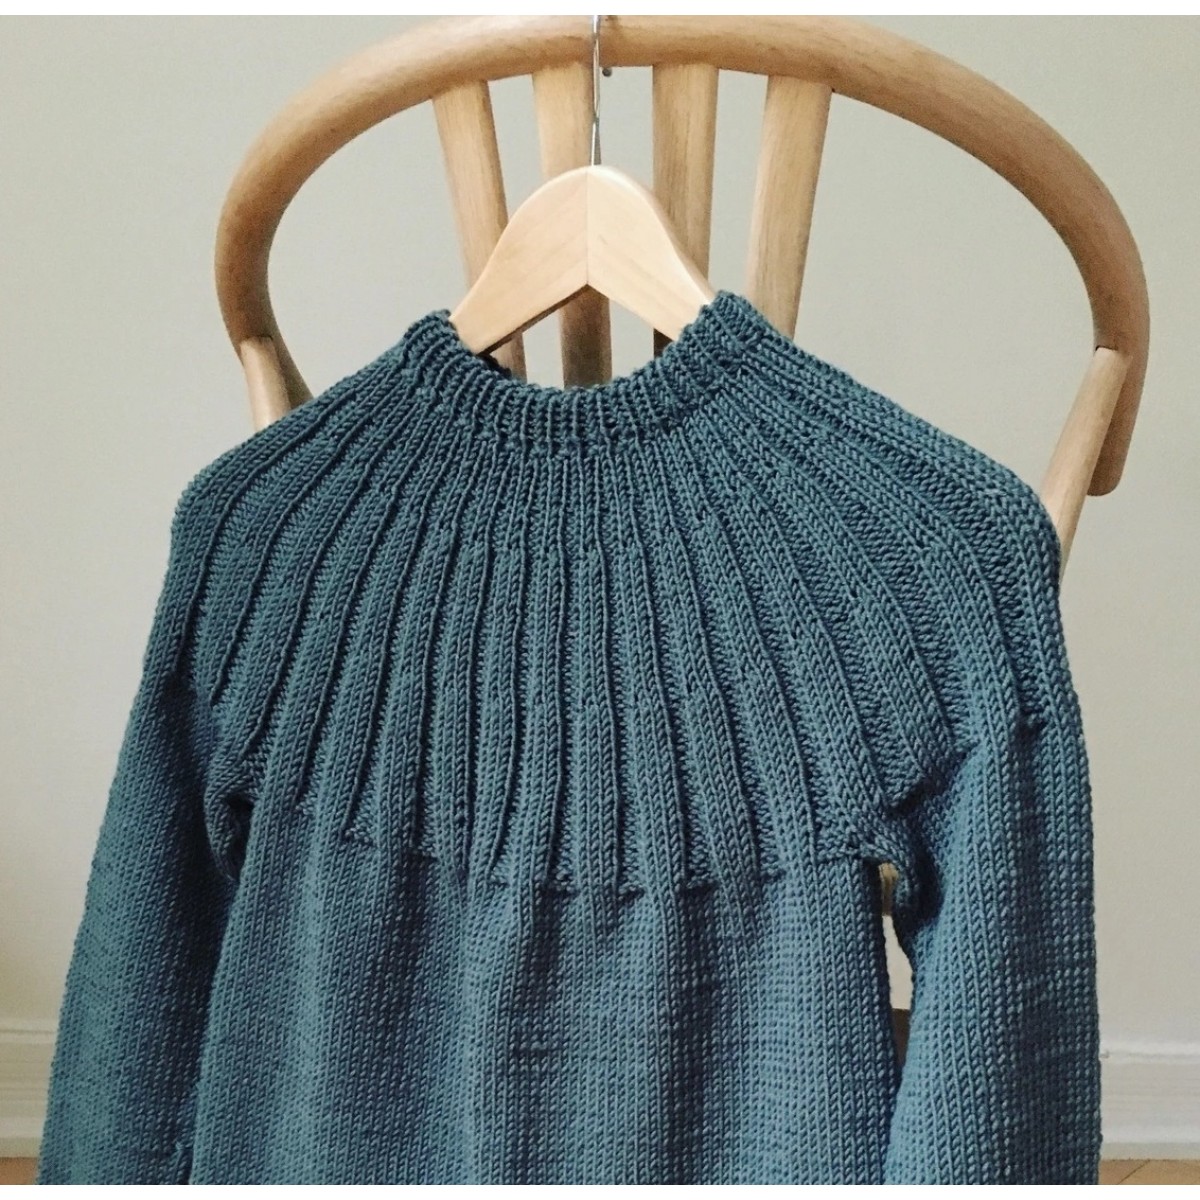 Haralds sweater